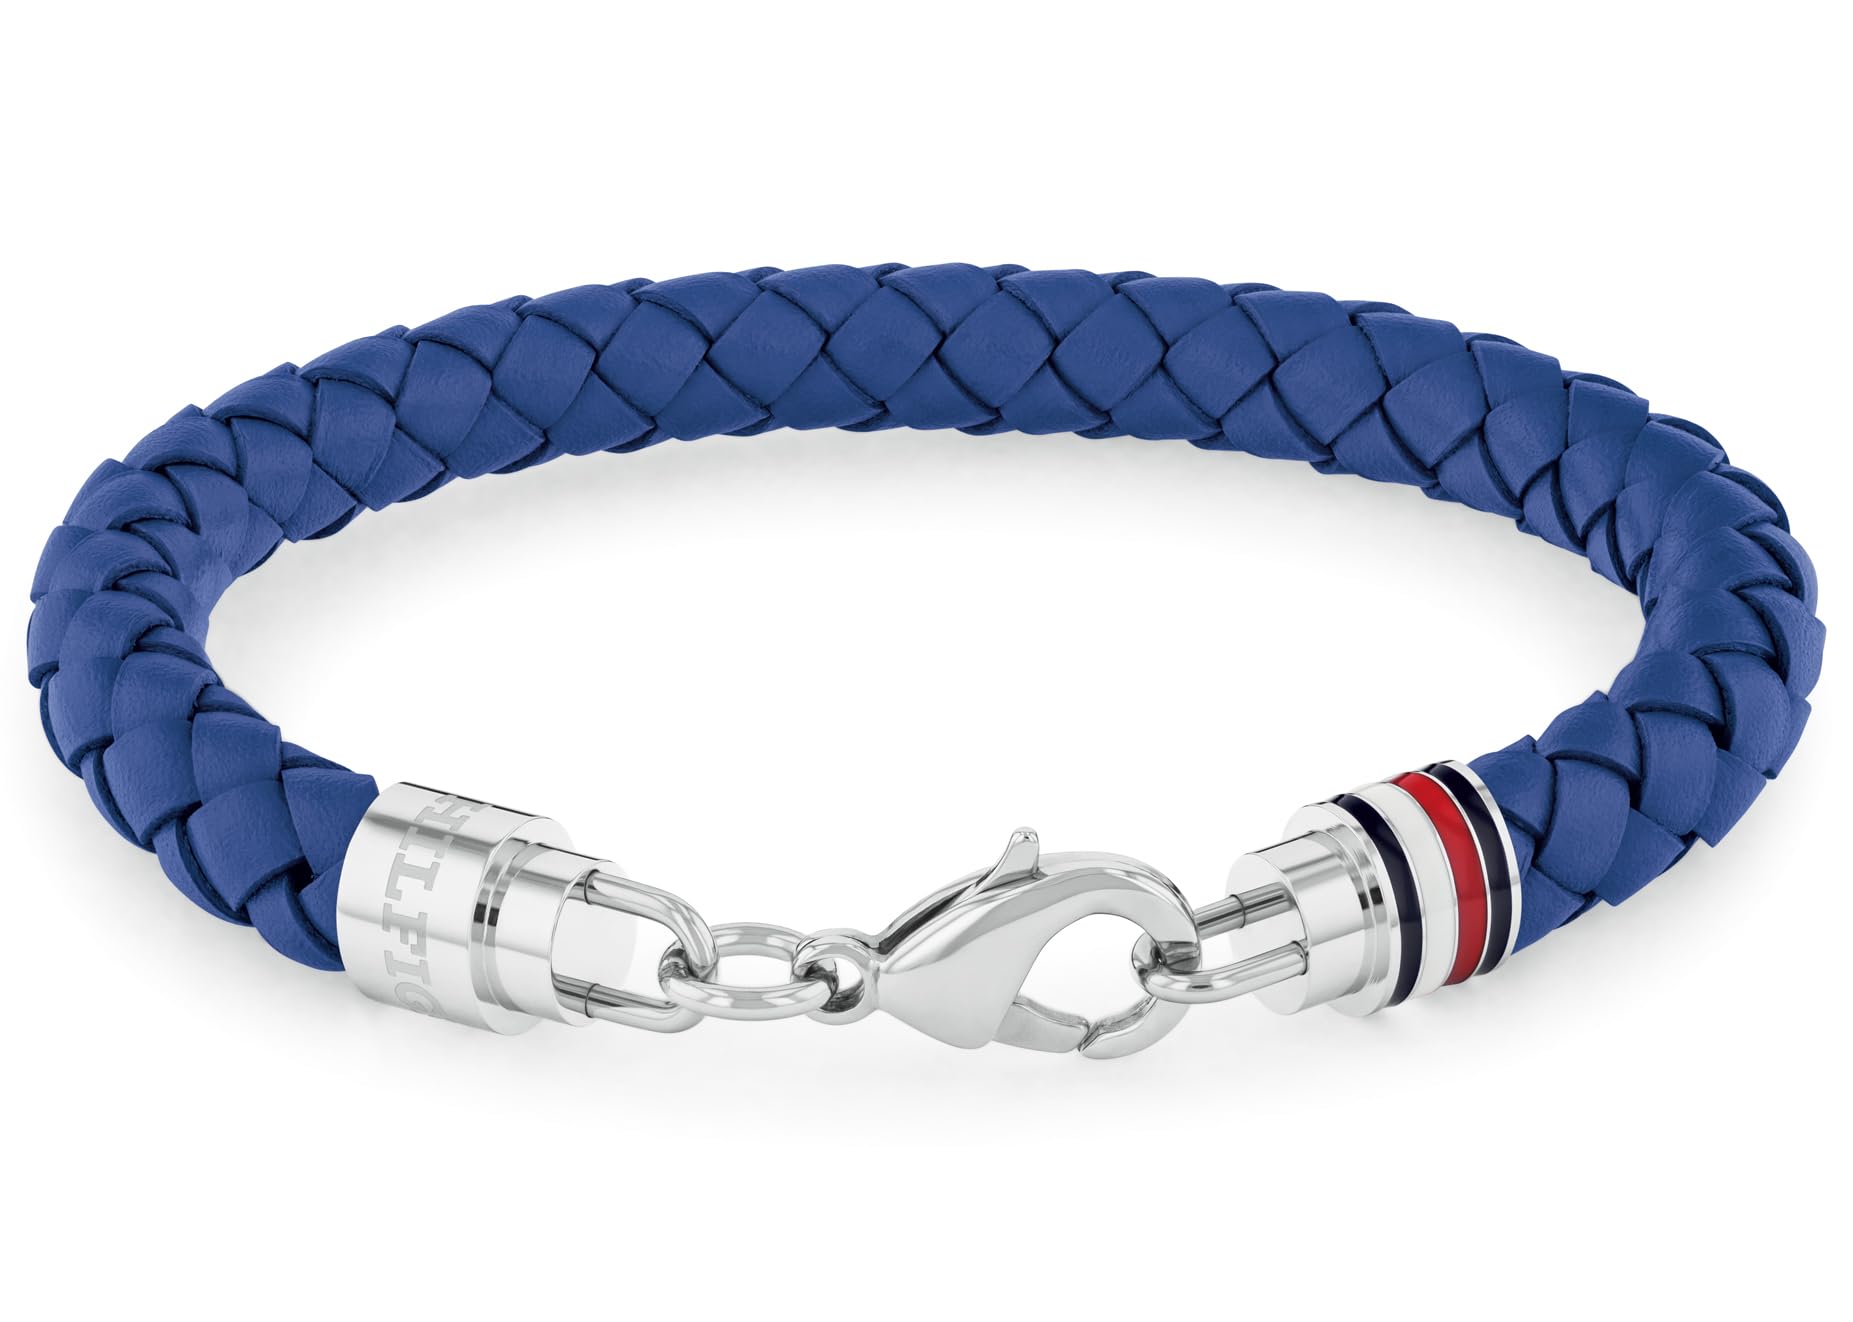 Tommy Hilfiger Men's Jewelry Bracelet, Braided Blue Leather, Lobster Closure, Casual Wear, (Model:2790548)